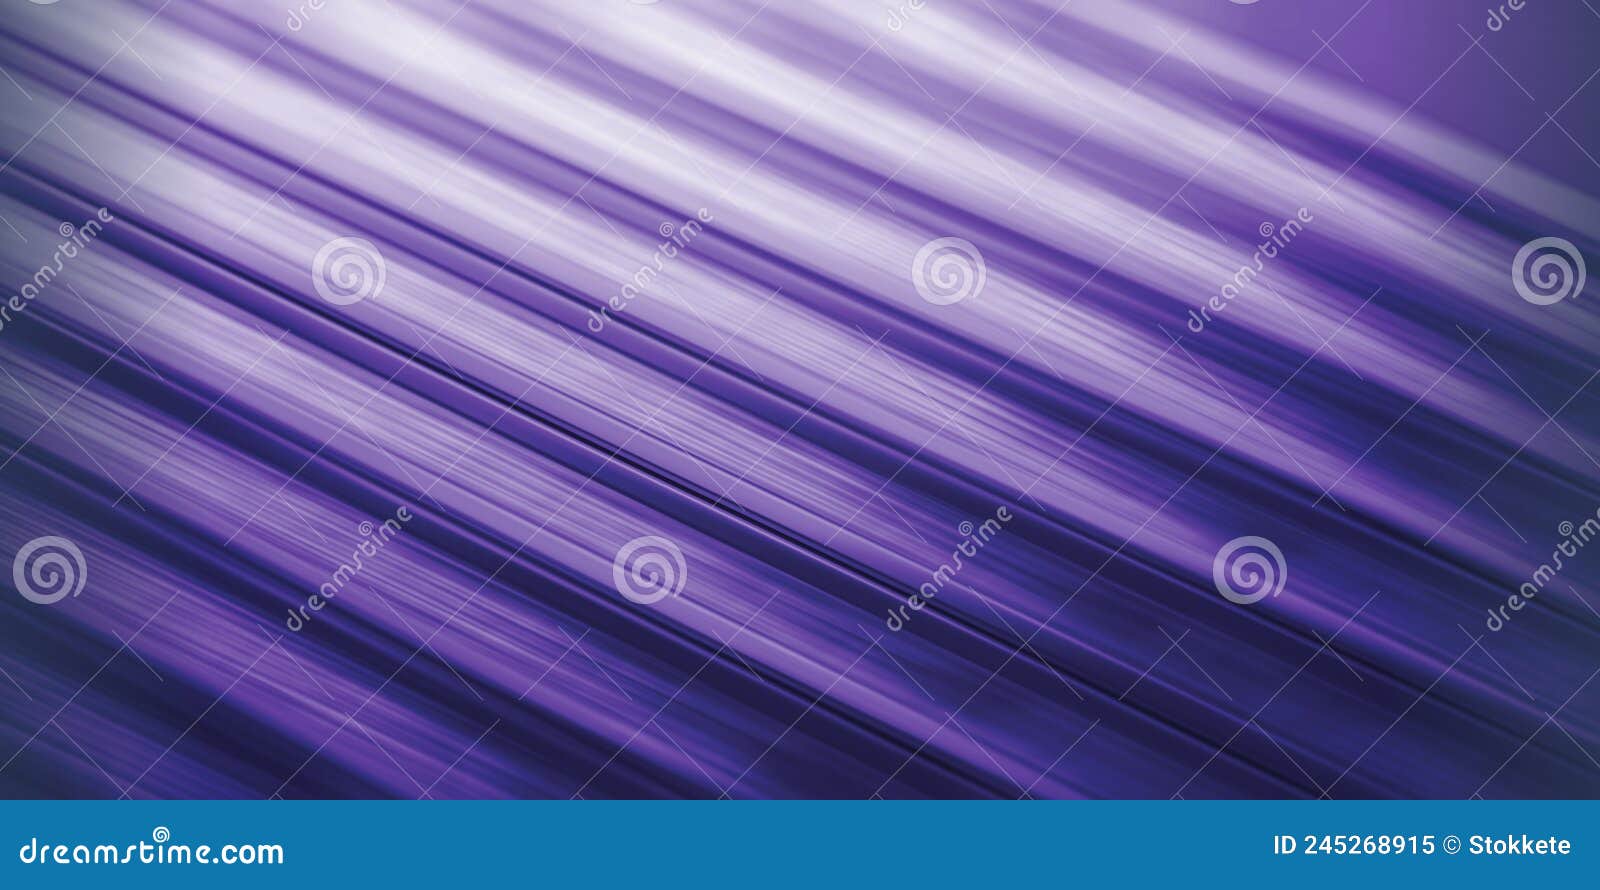 tridimensional purple lines background